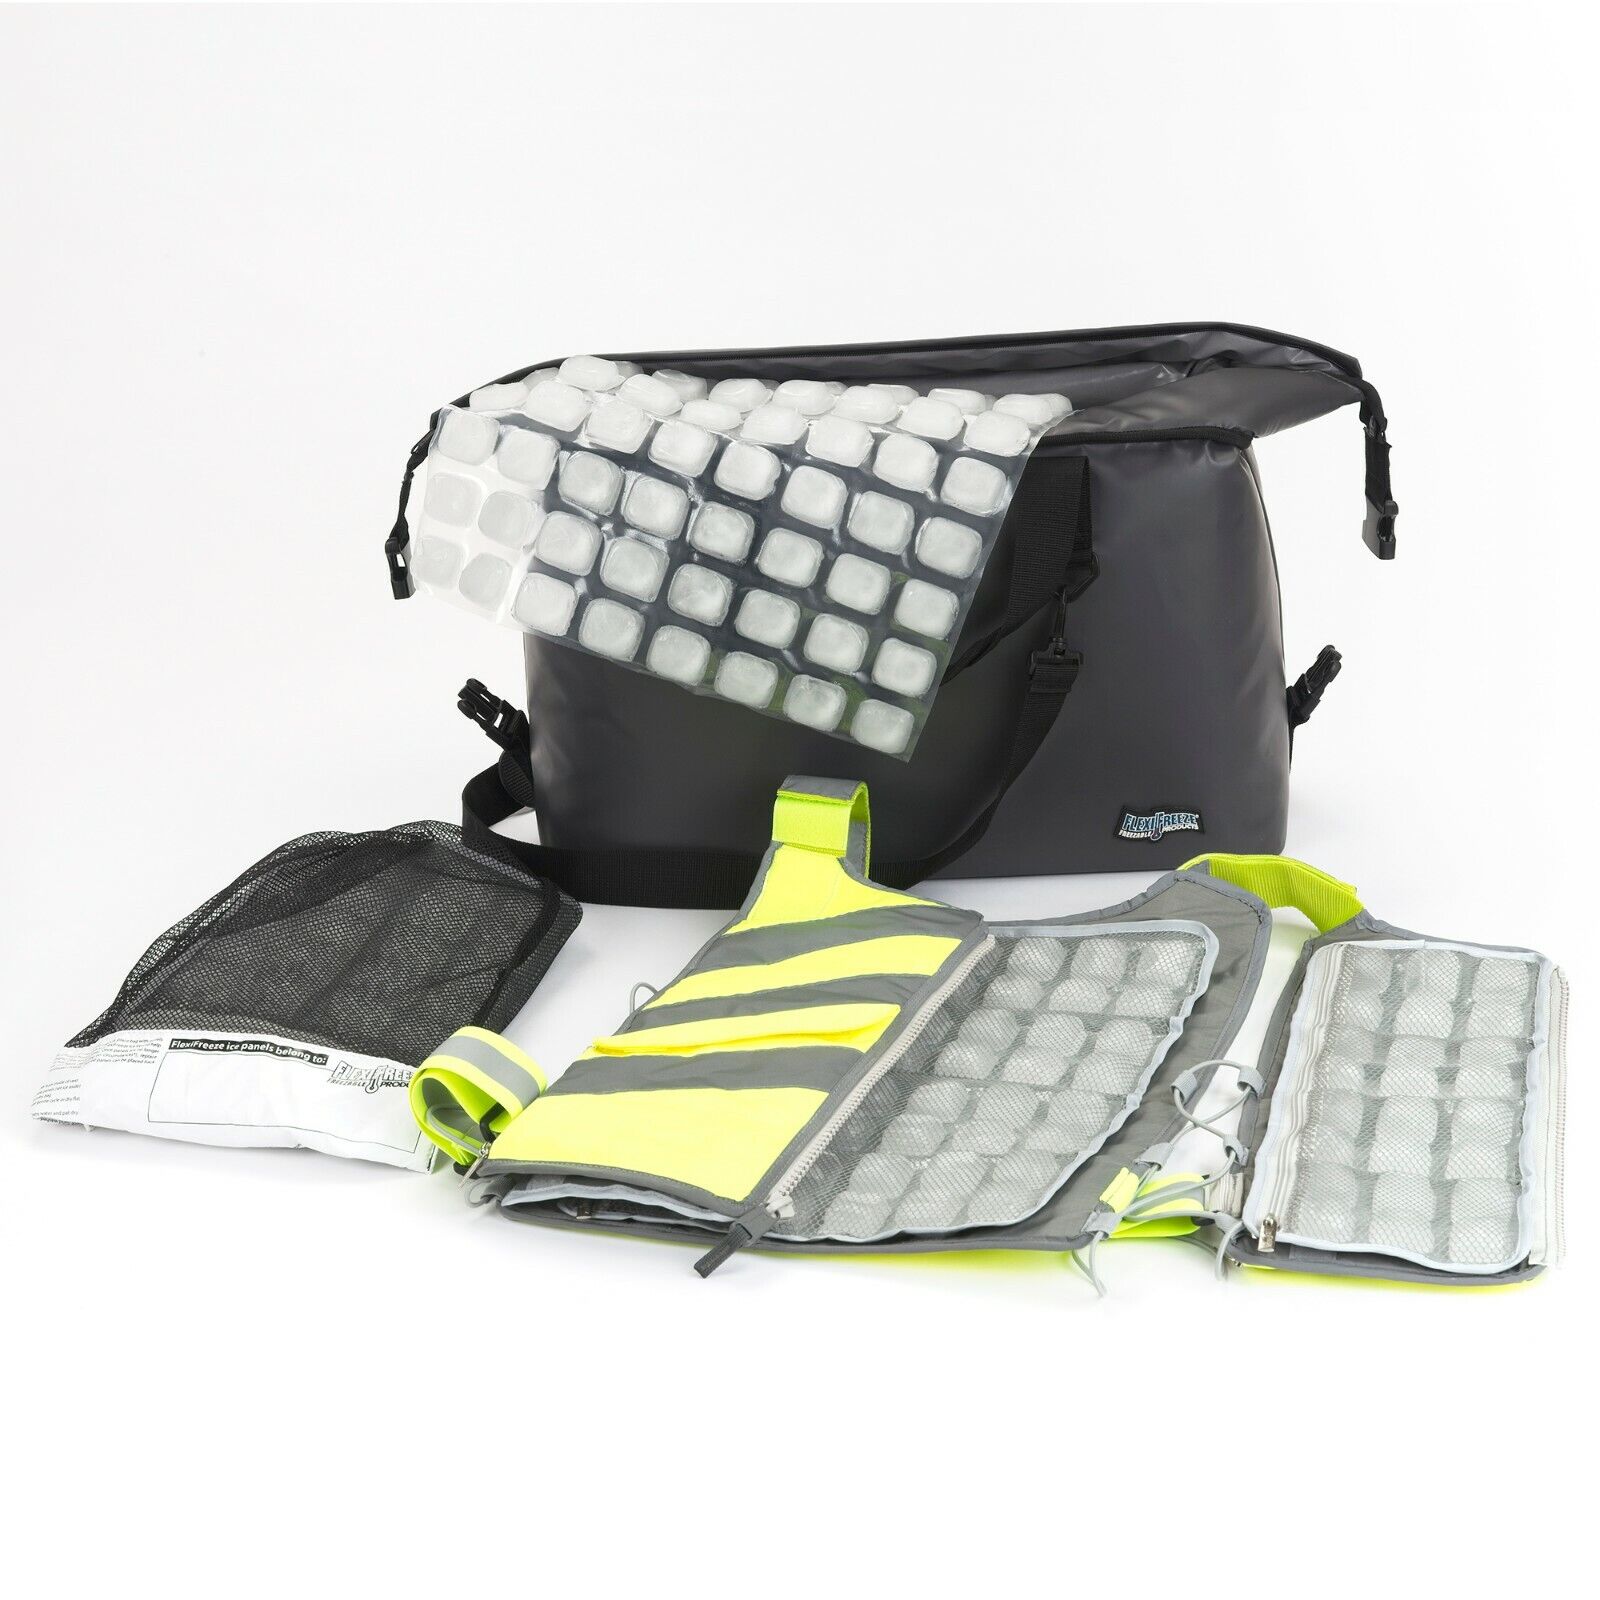 FlexiFreeze Personal Cooling Kit:Pro Series - Vest, Cooler, Refill Ice Panels